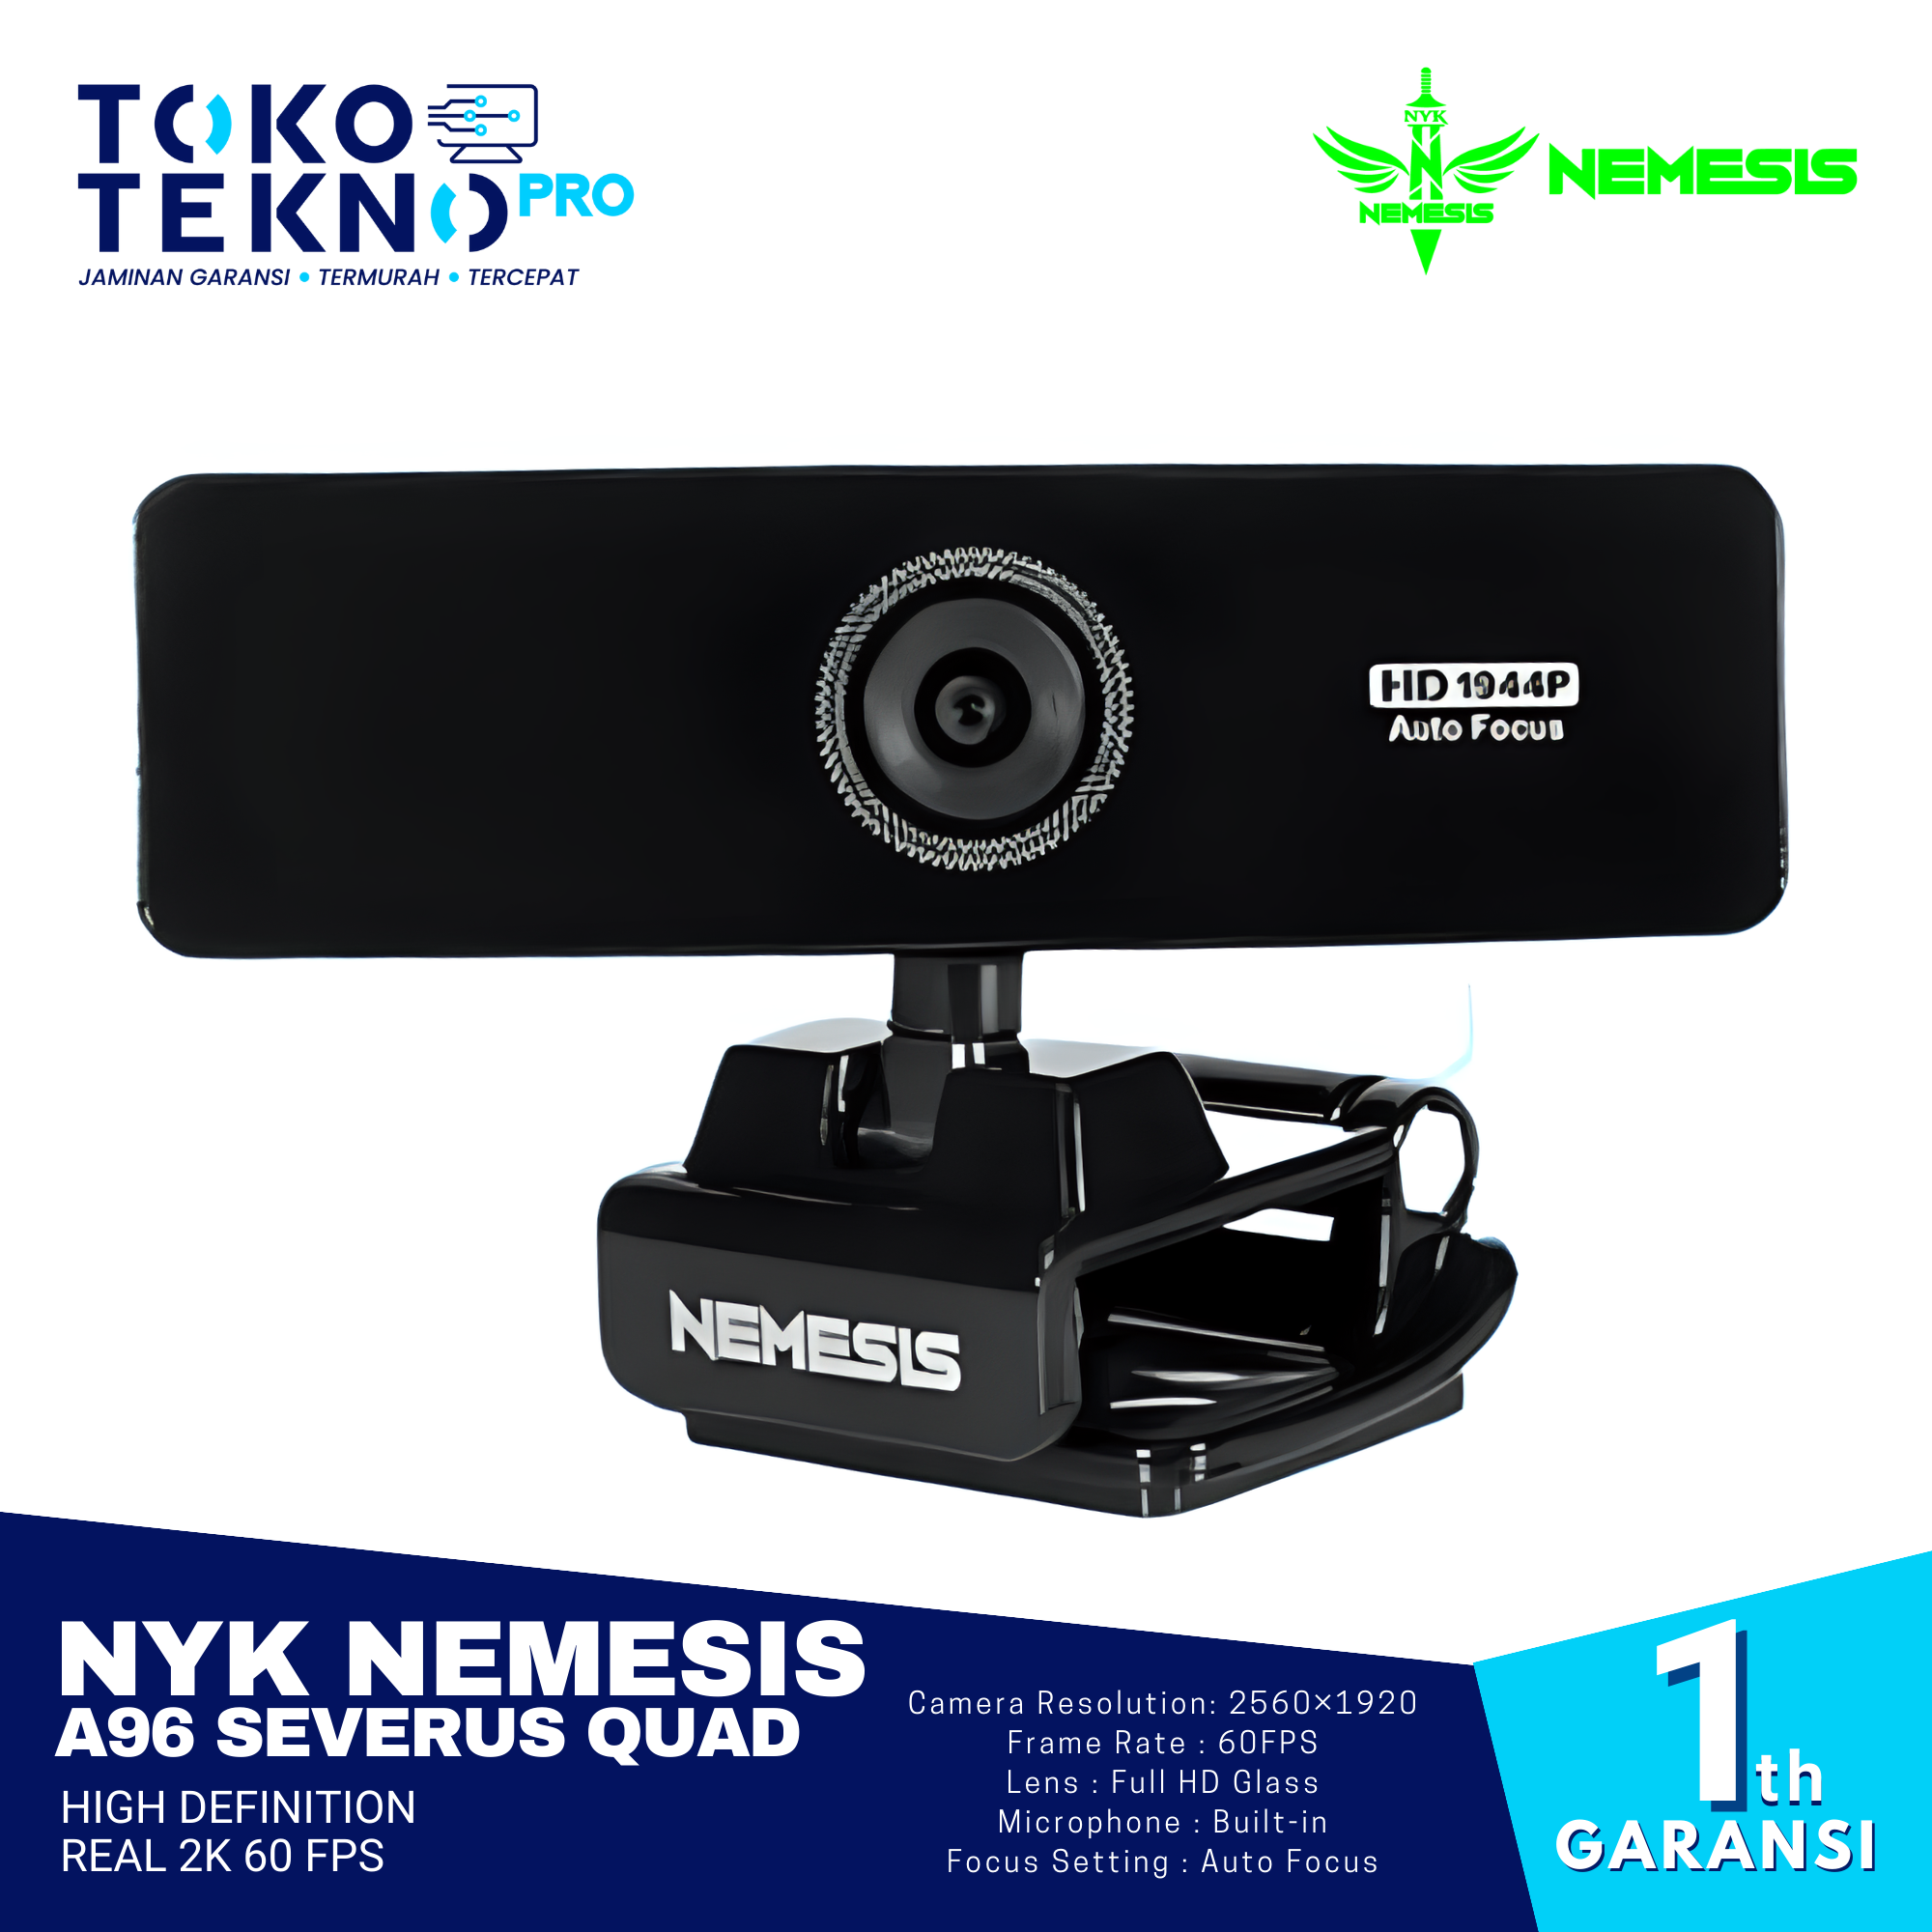 NYK Nemesis A96 Severus Quad High Definition Real 2K 60 FPS